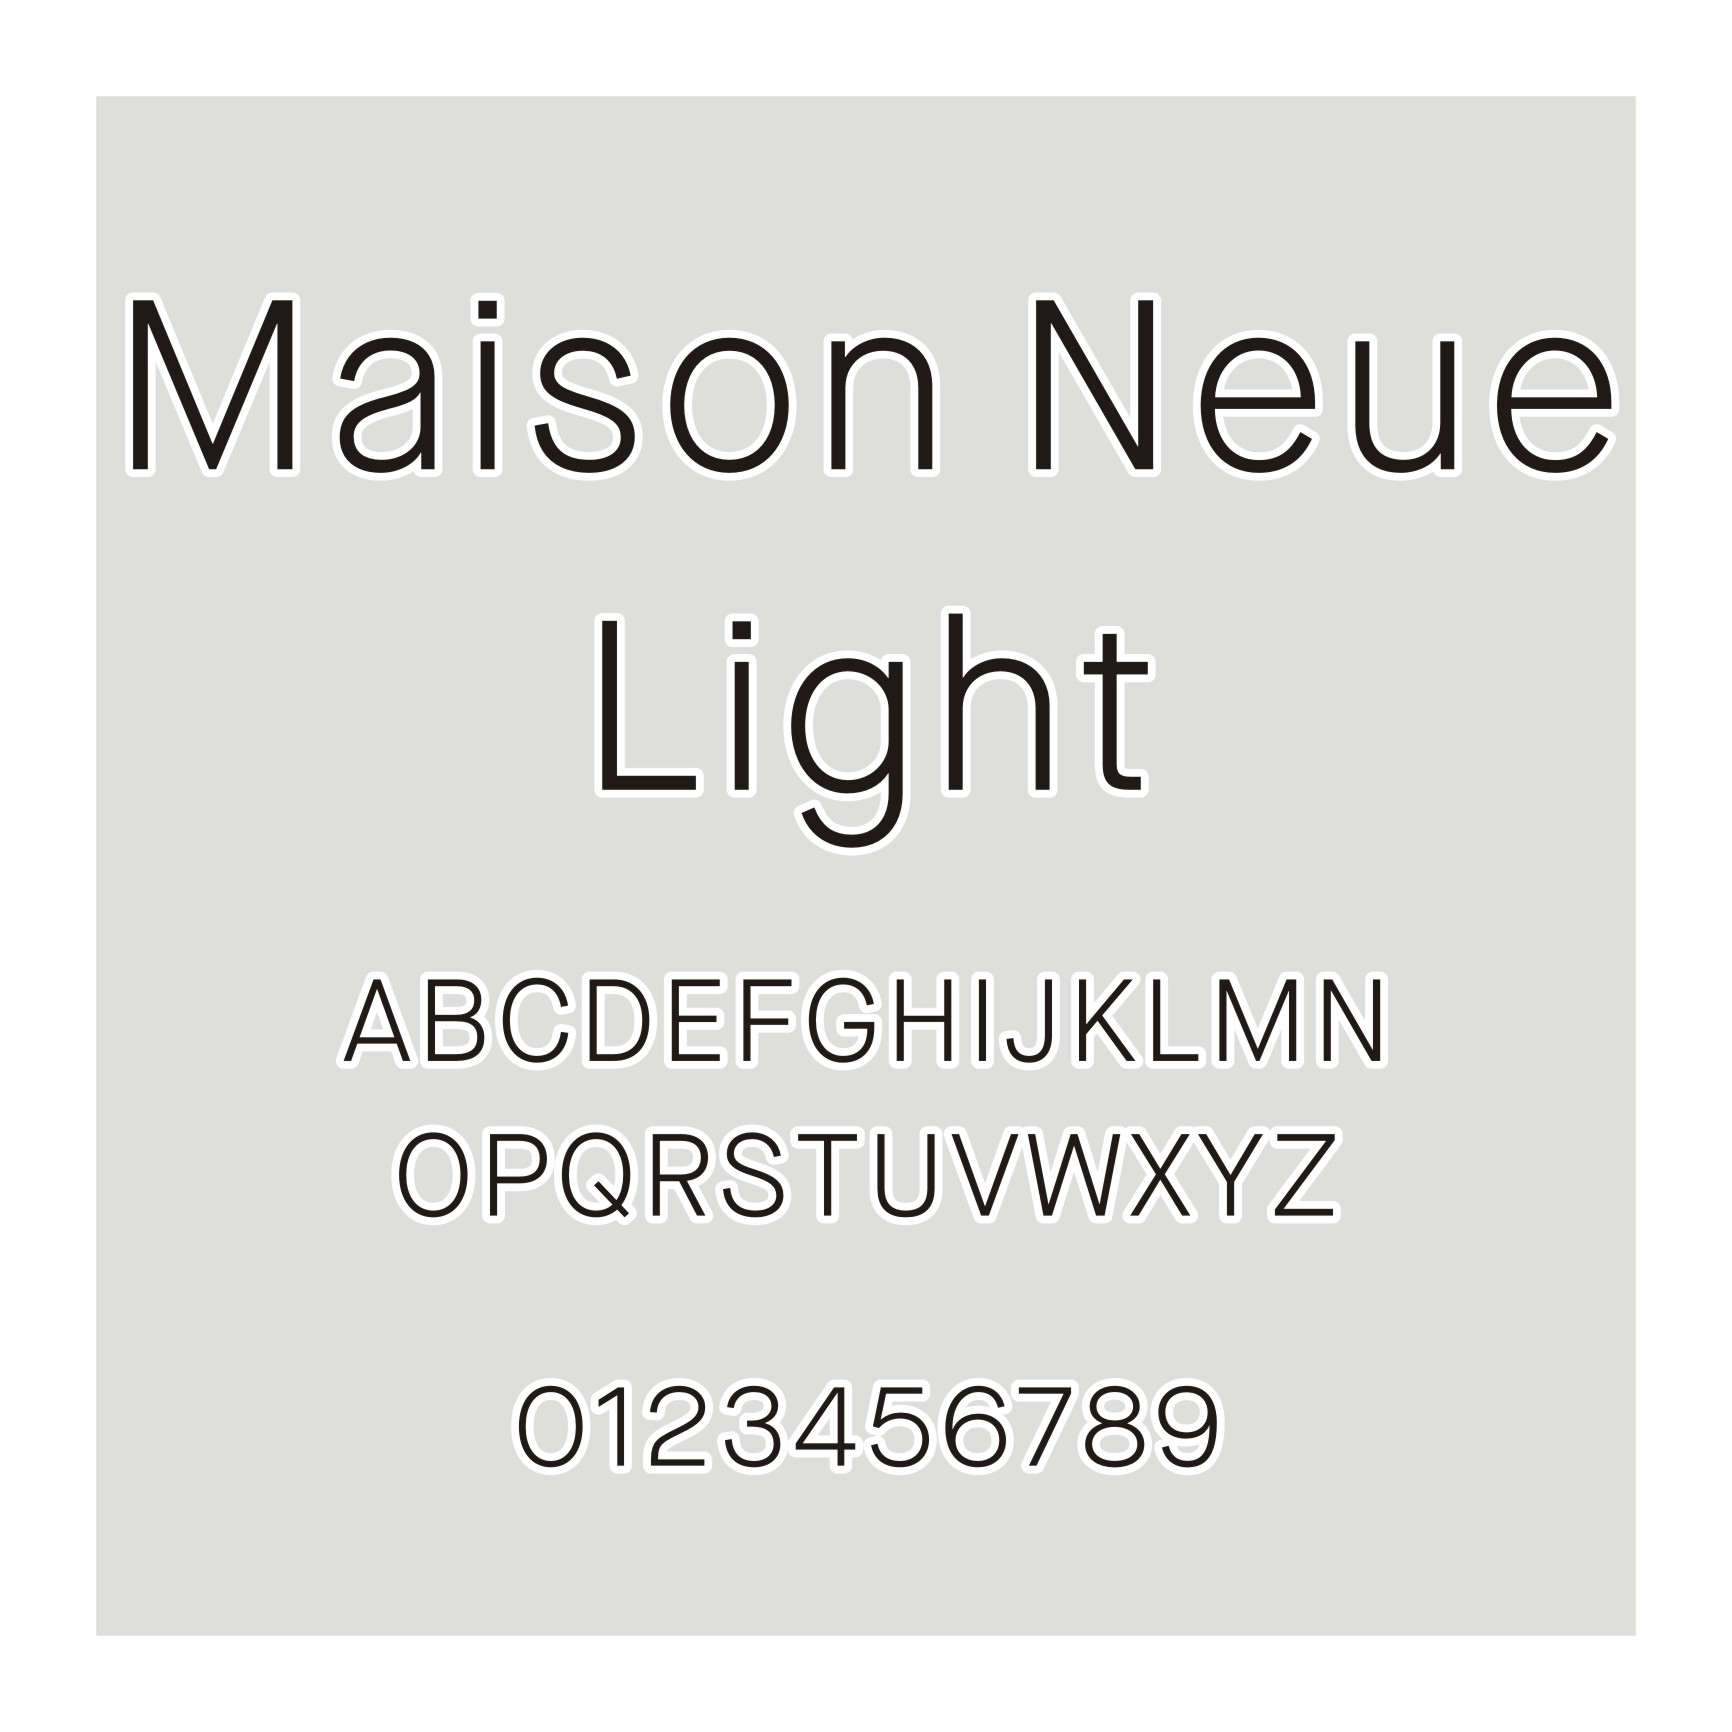 Maison Neue Light